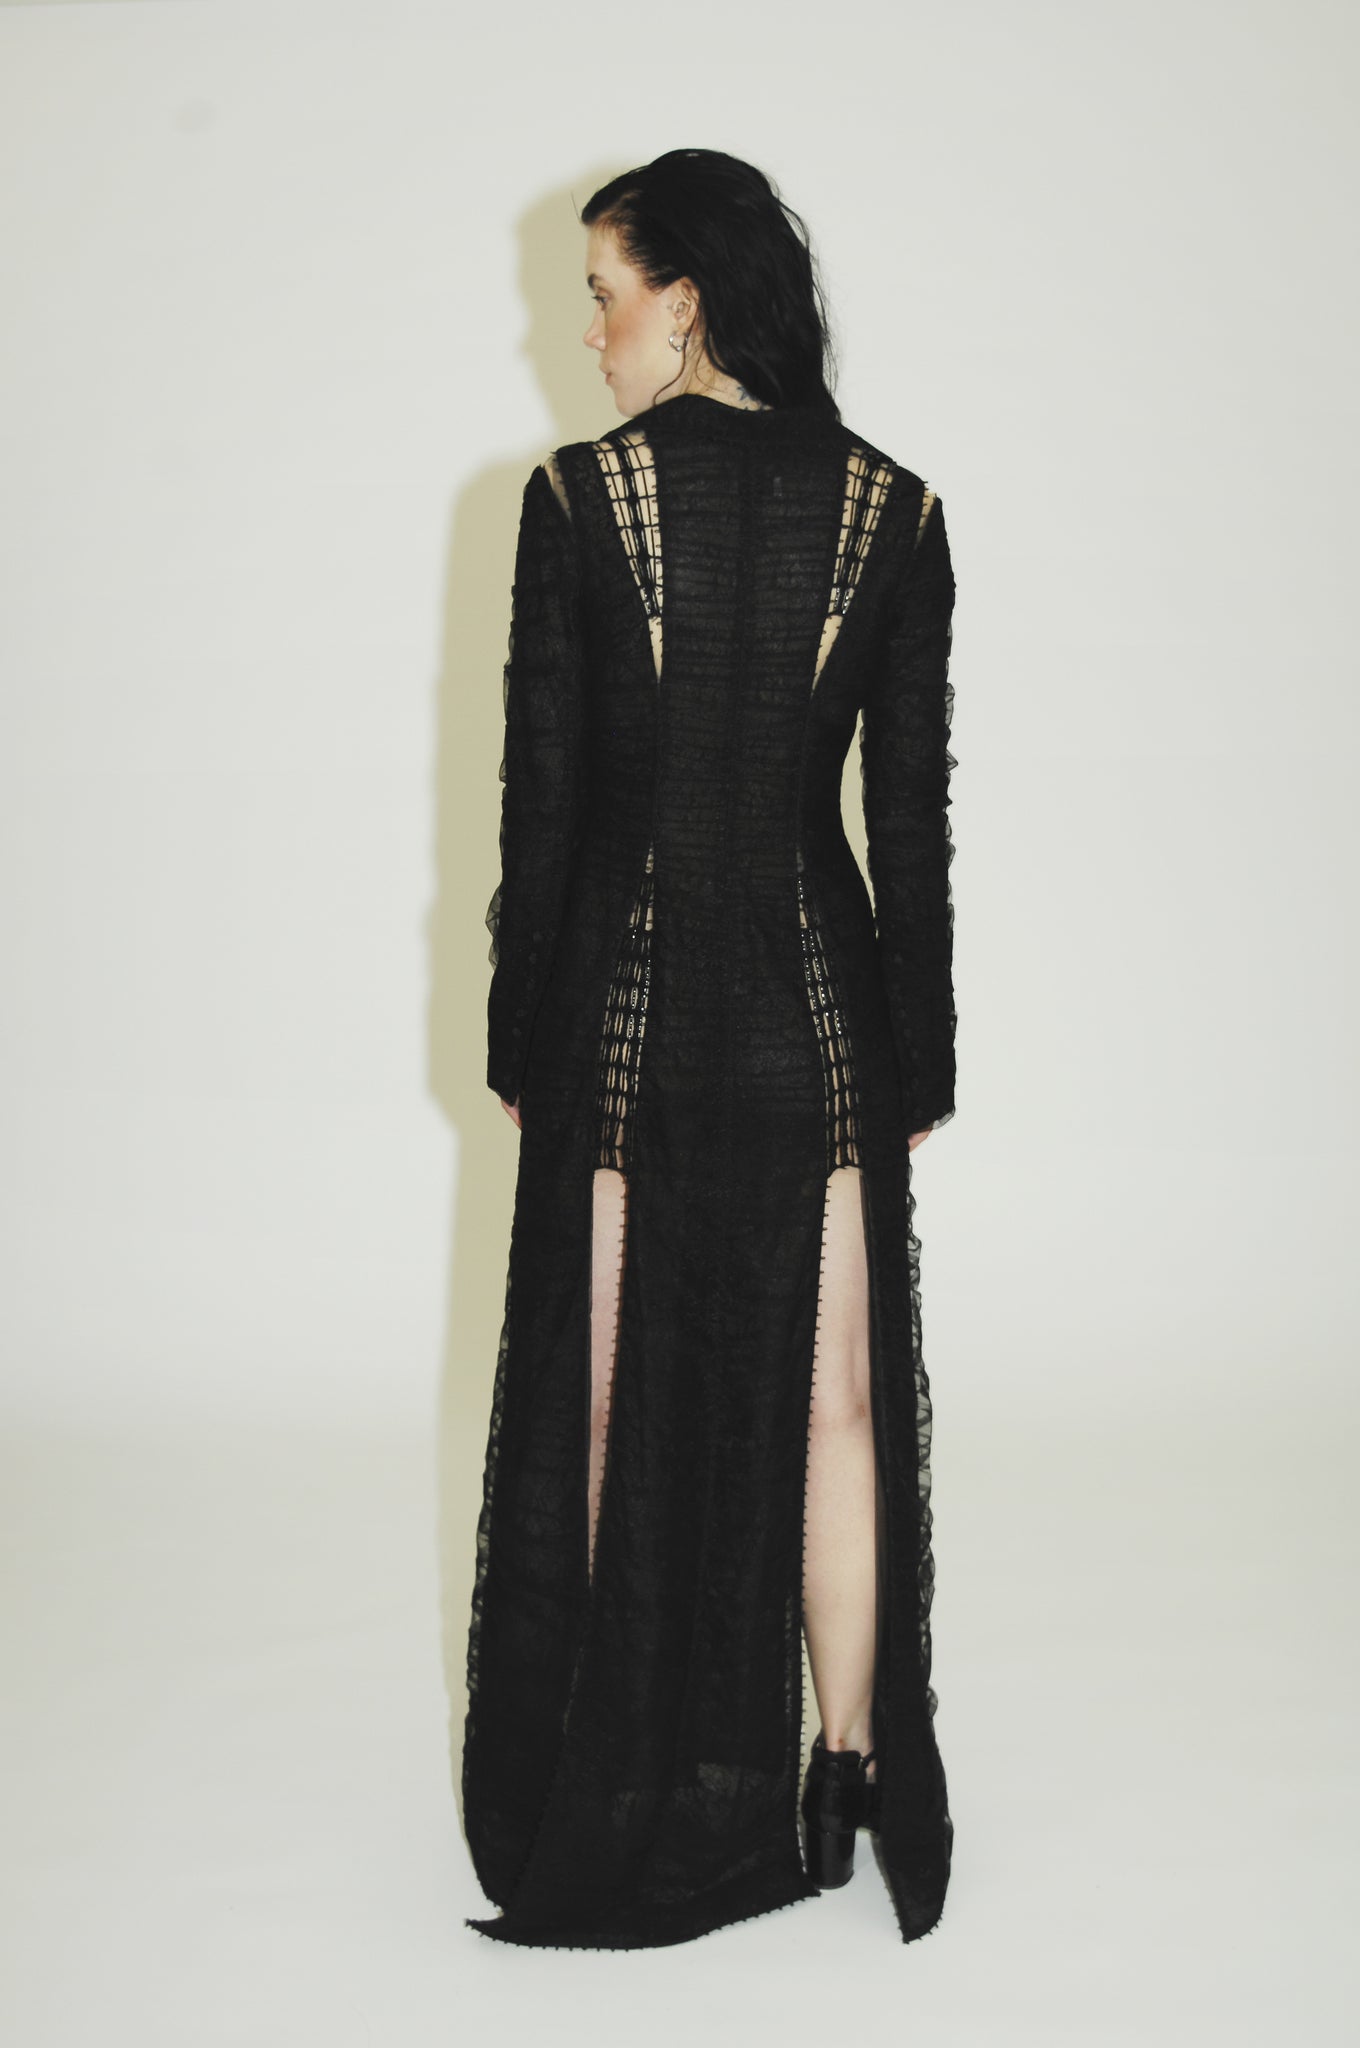 Elegant long sleeve black evening dress for a glamorous look